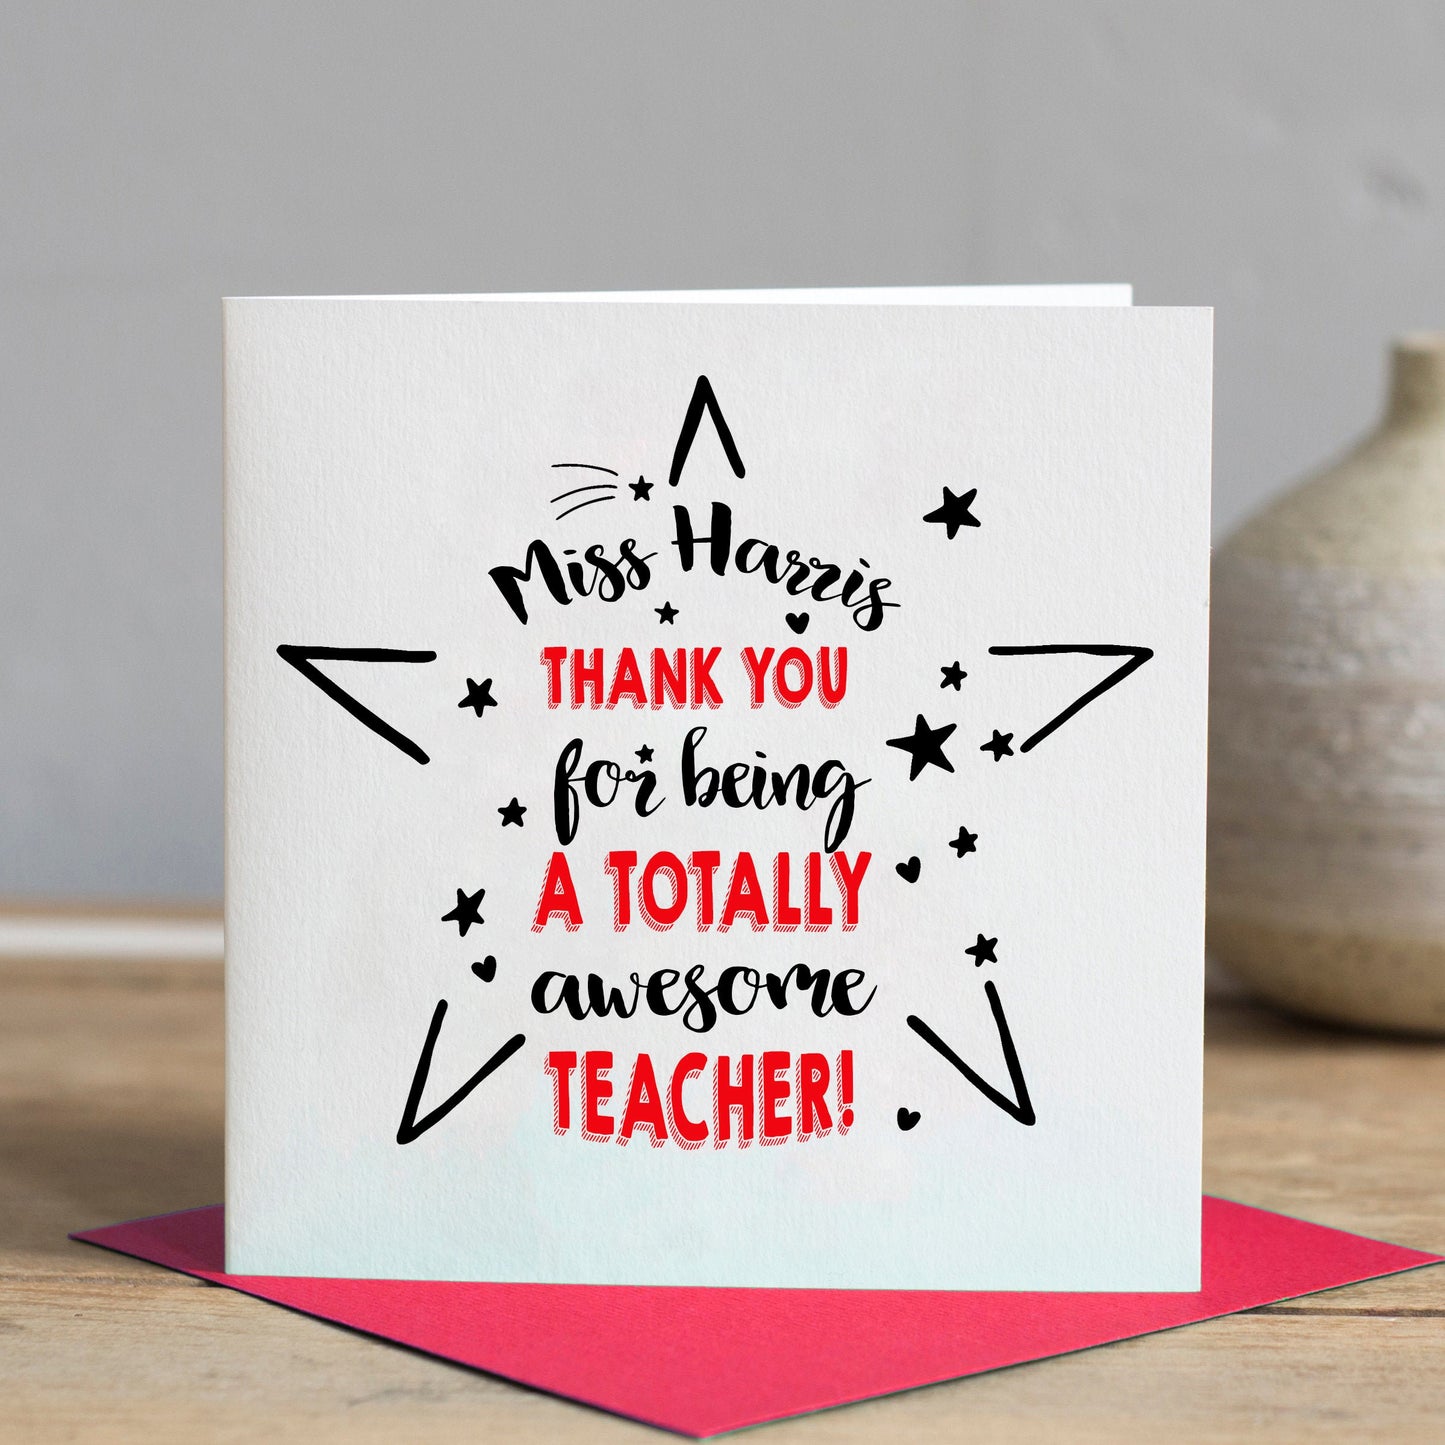 Thank you Teacher Card - Awesome